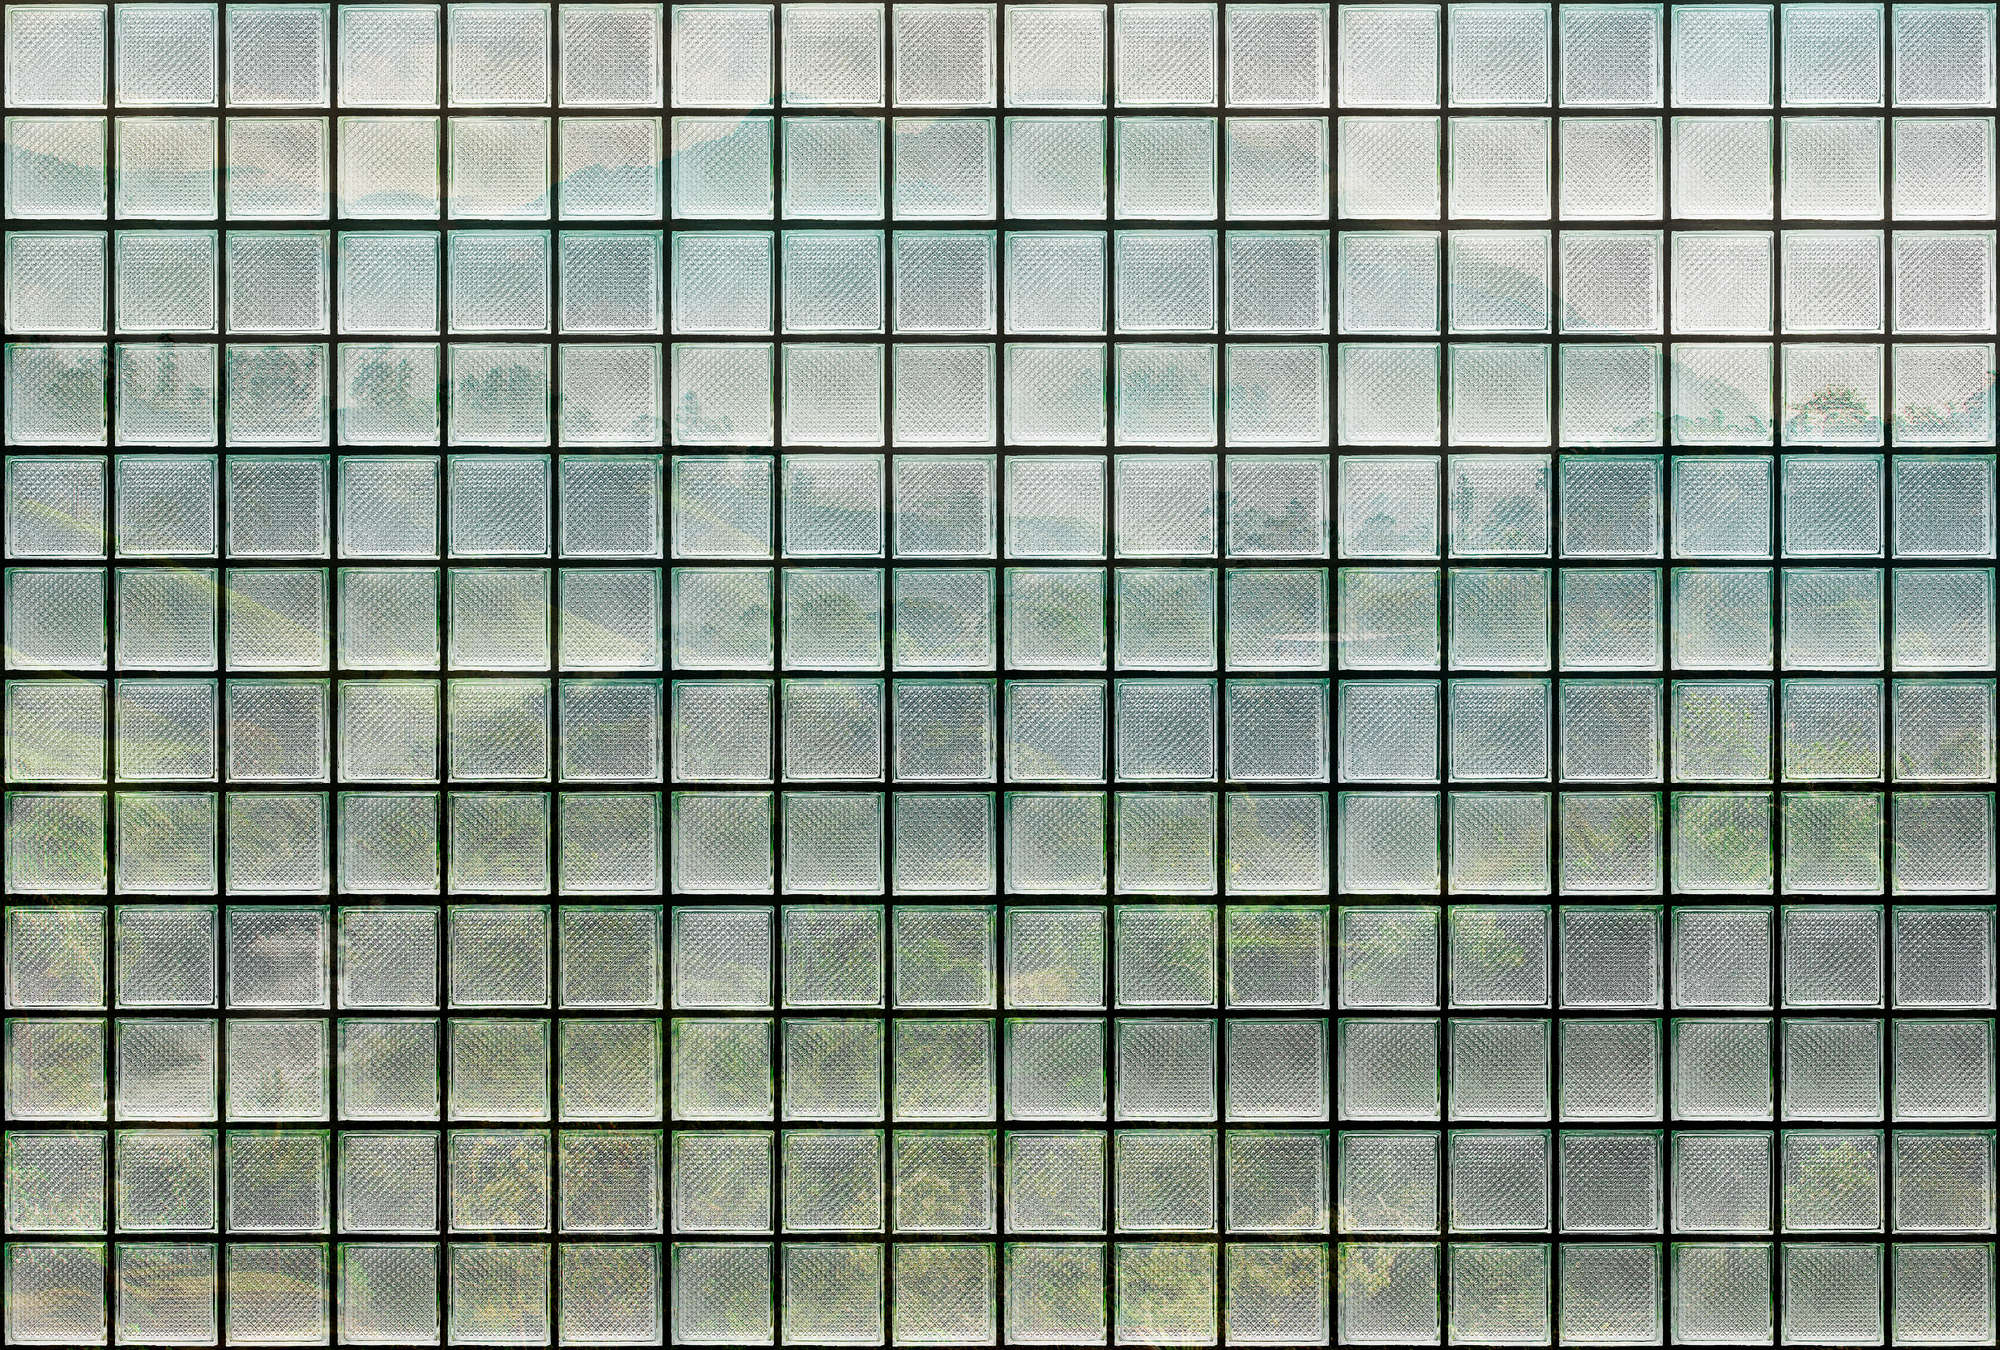             Green House 3 - window mural glass blocks & tropical forest
        